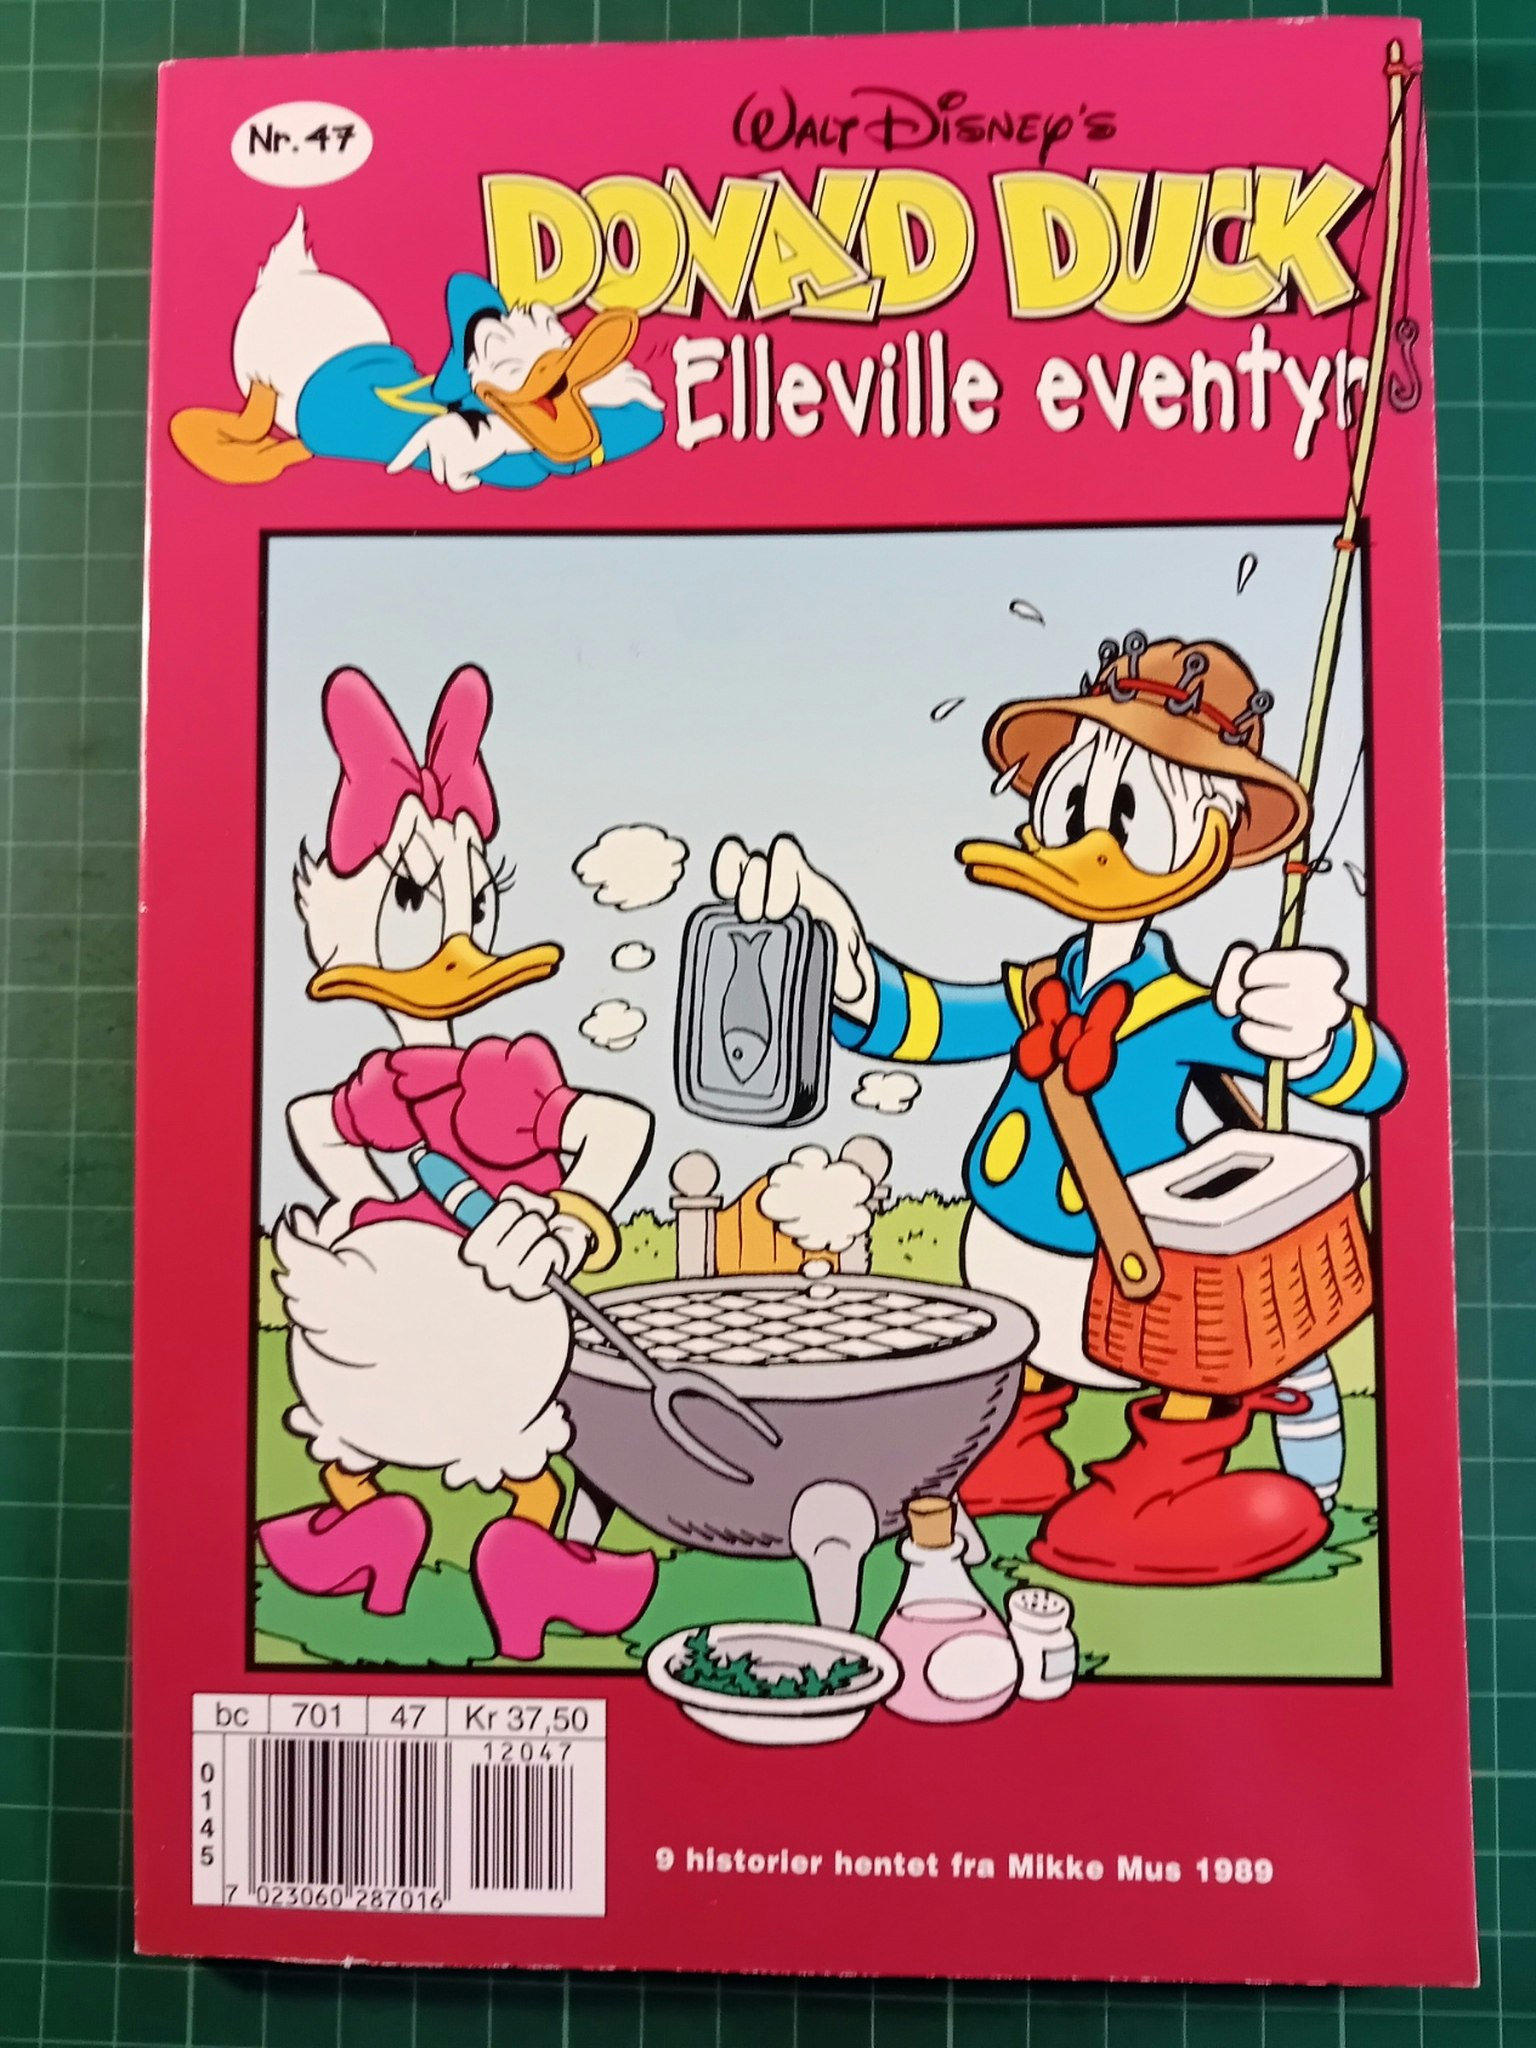 Donald Ducks elleville eventyr 47